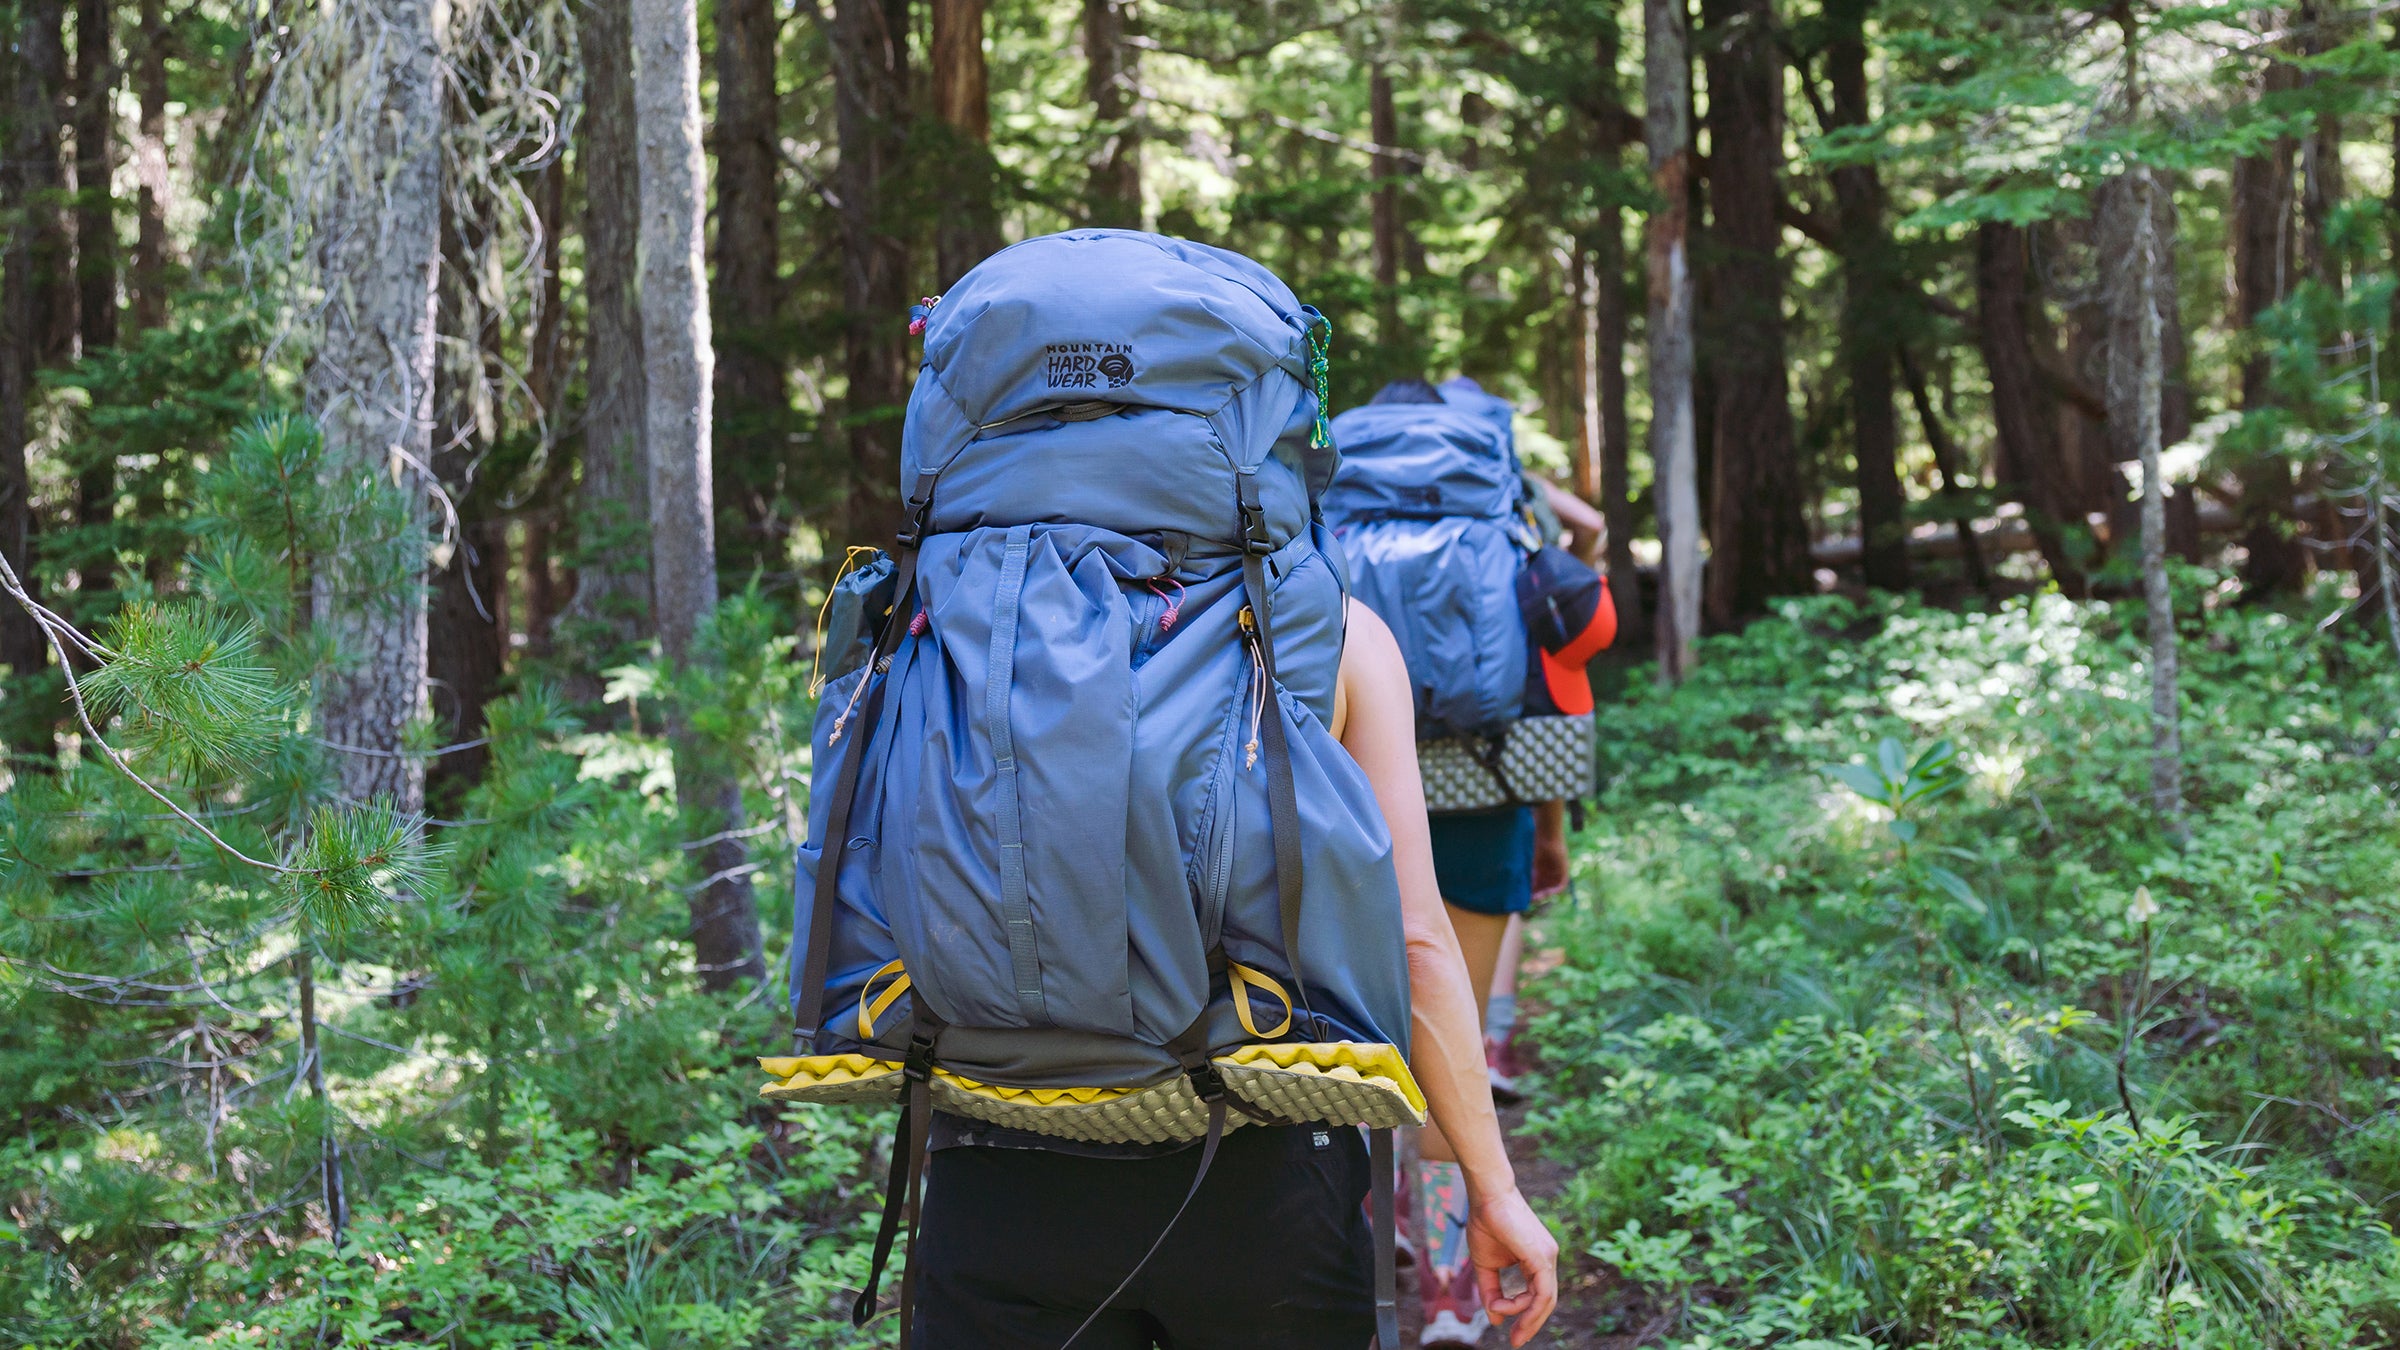 Hashtag Hummer Polyester Black Orange Trekking/Hiking Bag/Travel Bag/ Backpack - 50 L (Black) at Rs 2950 | Mountaineering Backpack in Vadodara |  ID: 22185664733